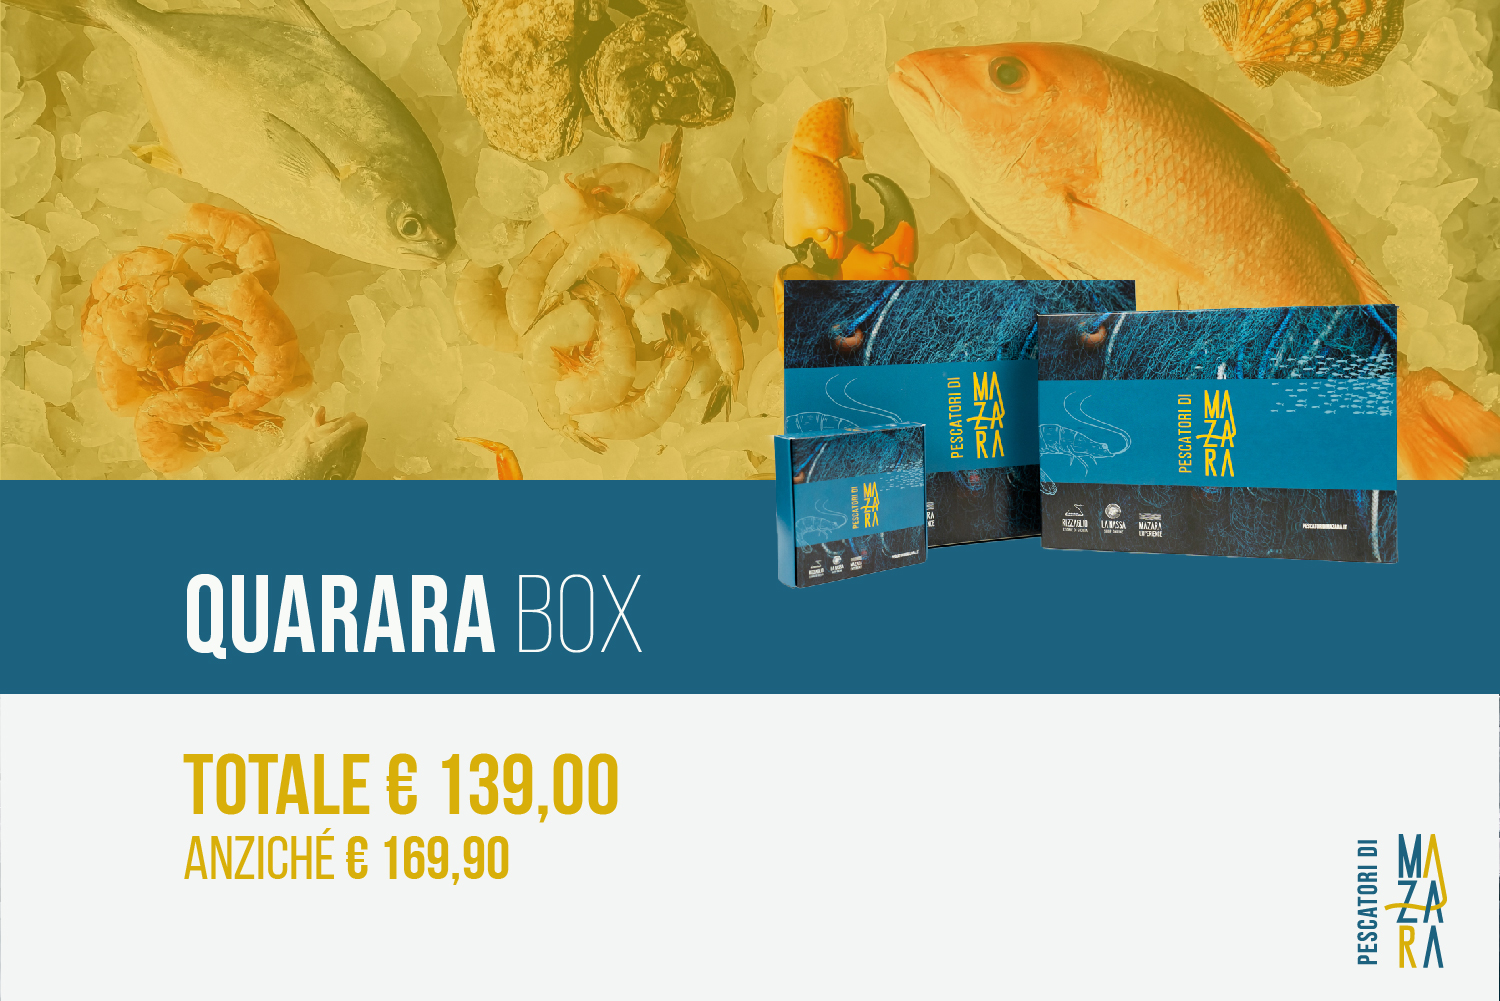 Quarara box confezione di pesce in offerta